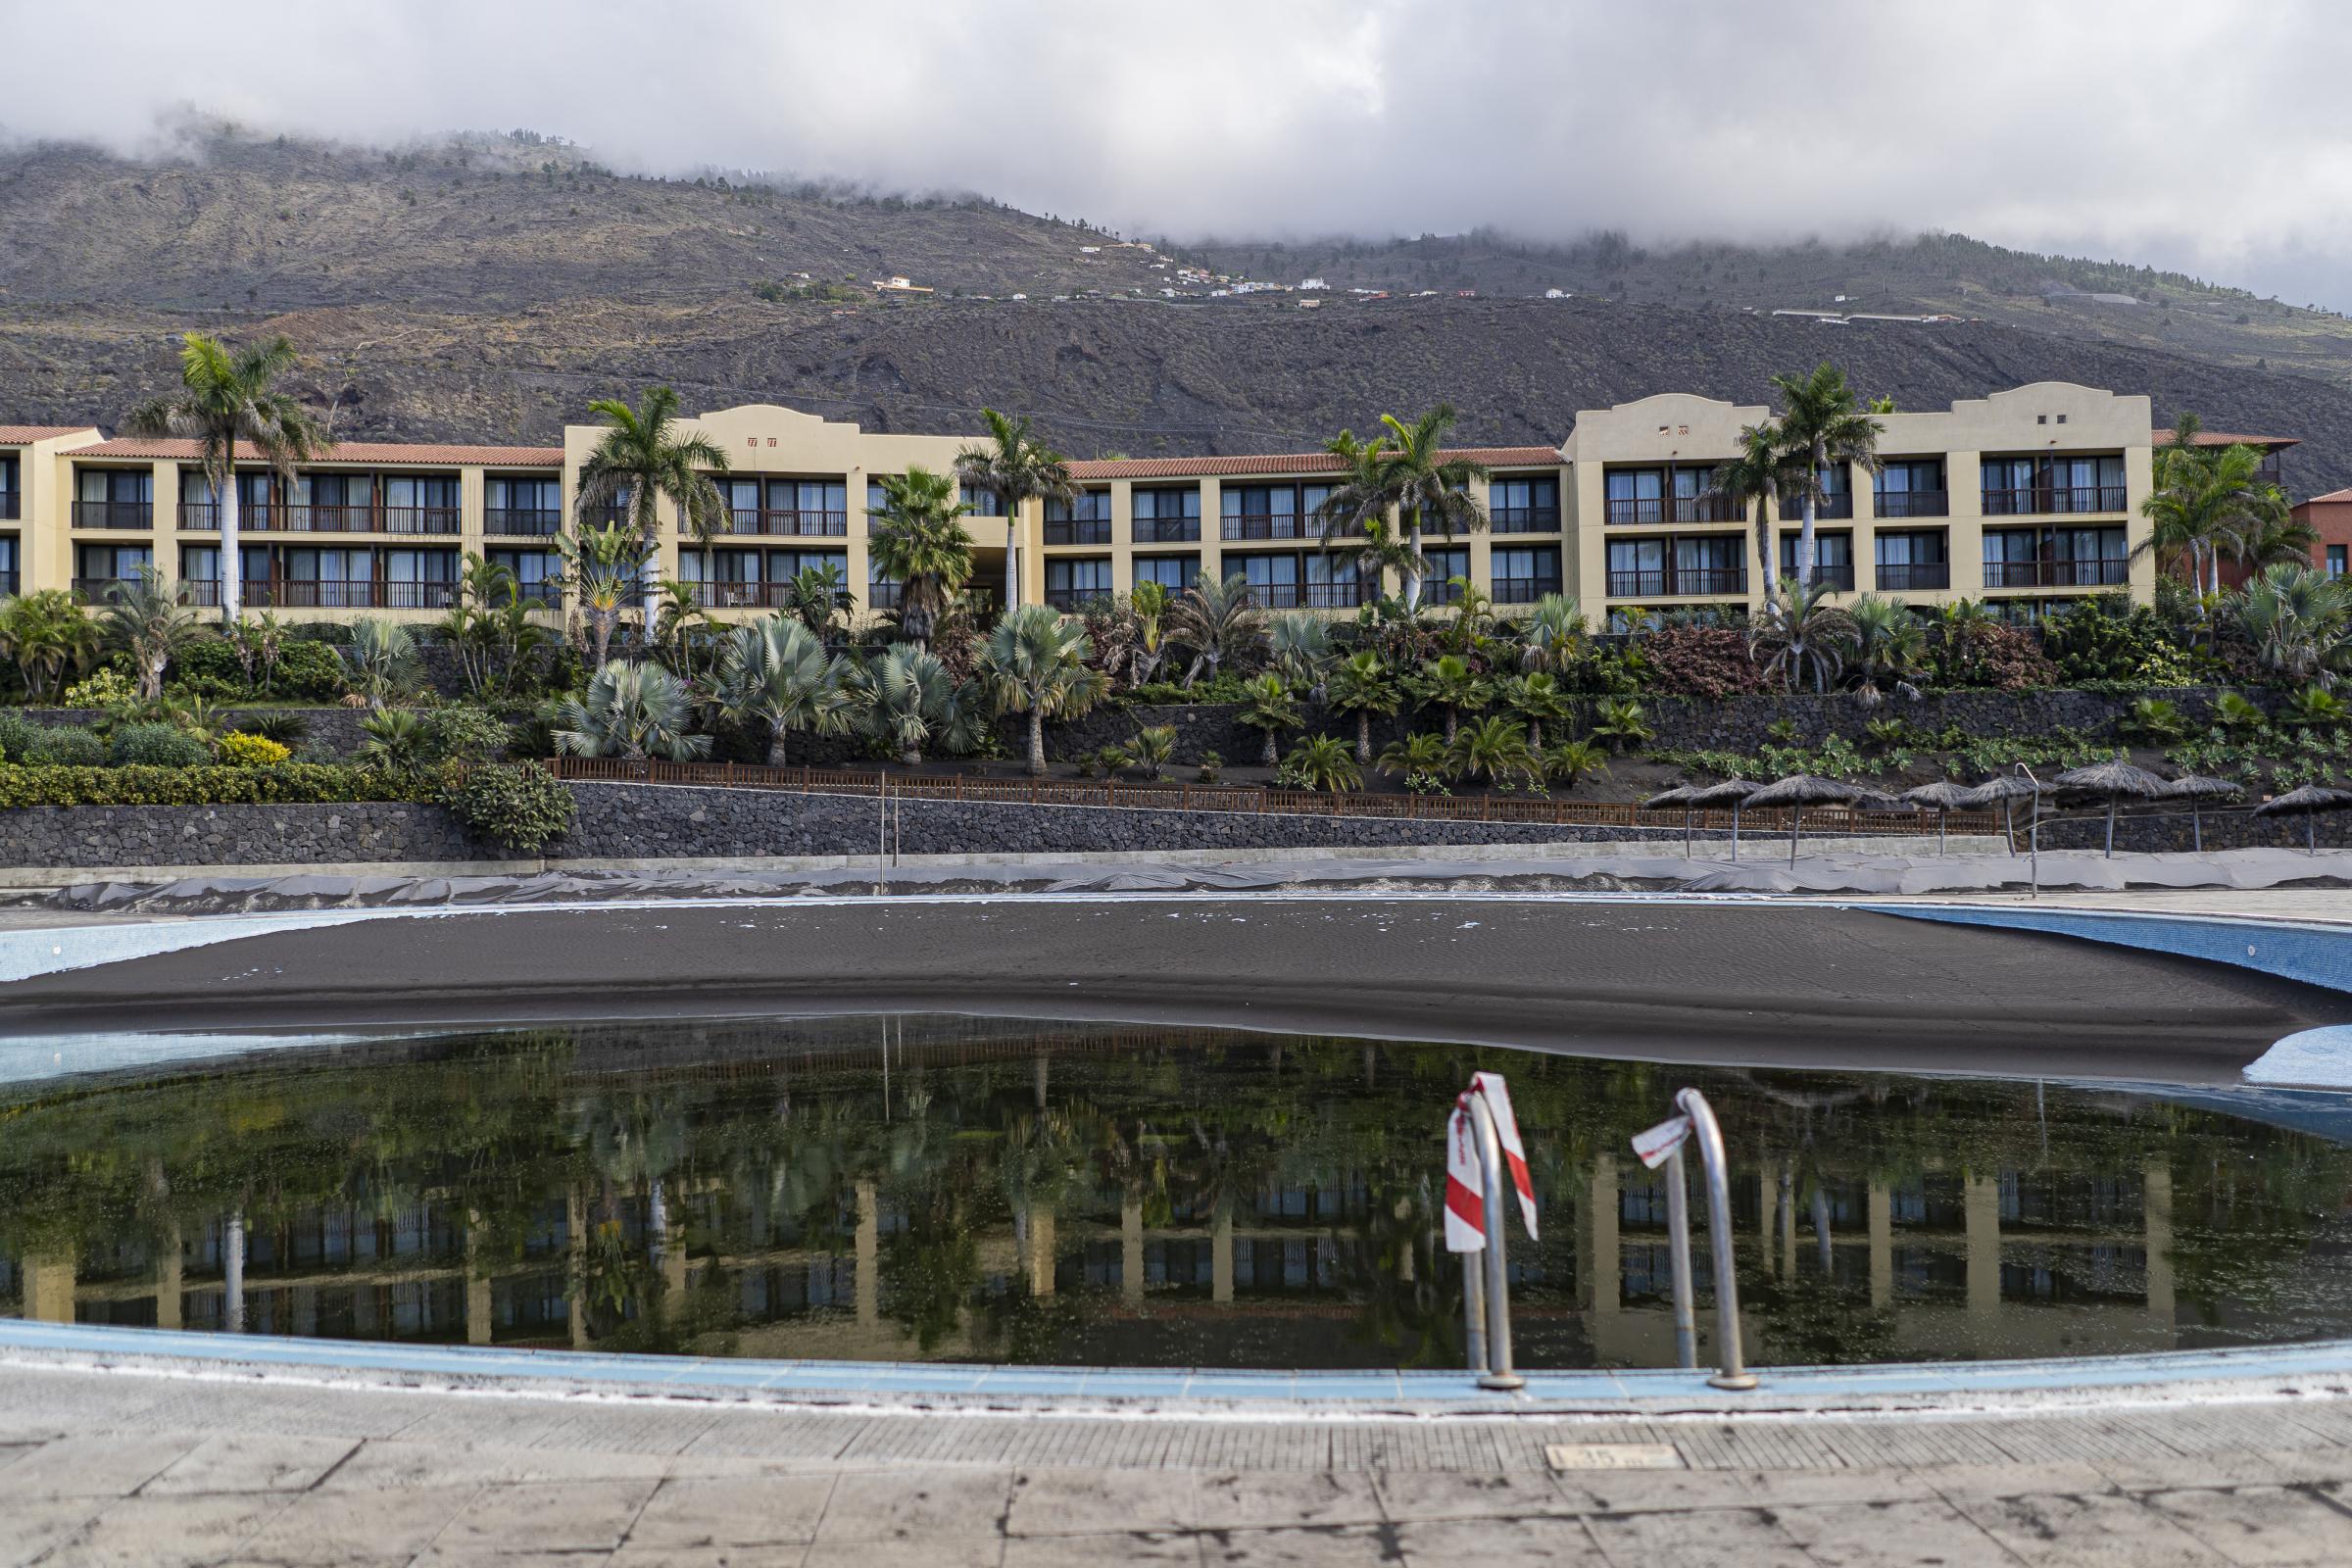 The Hotel La Palma &amp; Tenegu&iacute;a Princess, a four-star resort located on a cliff...